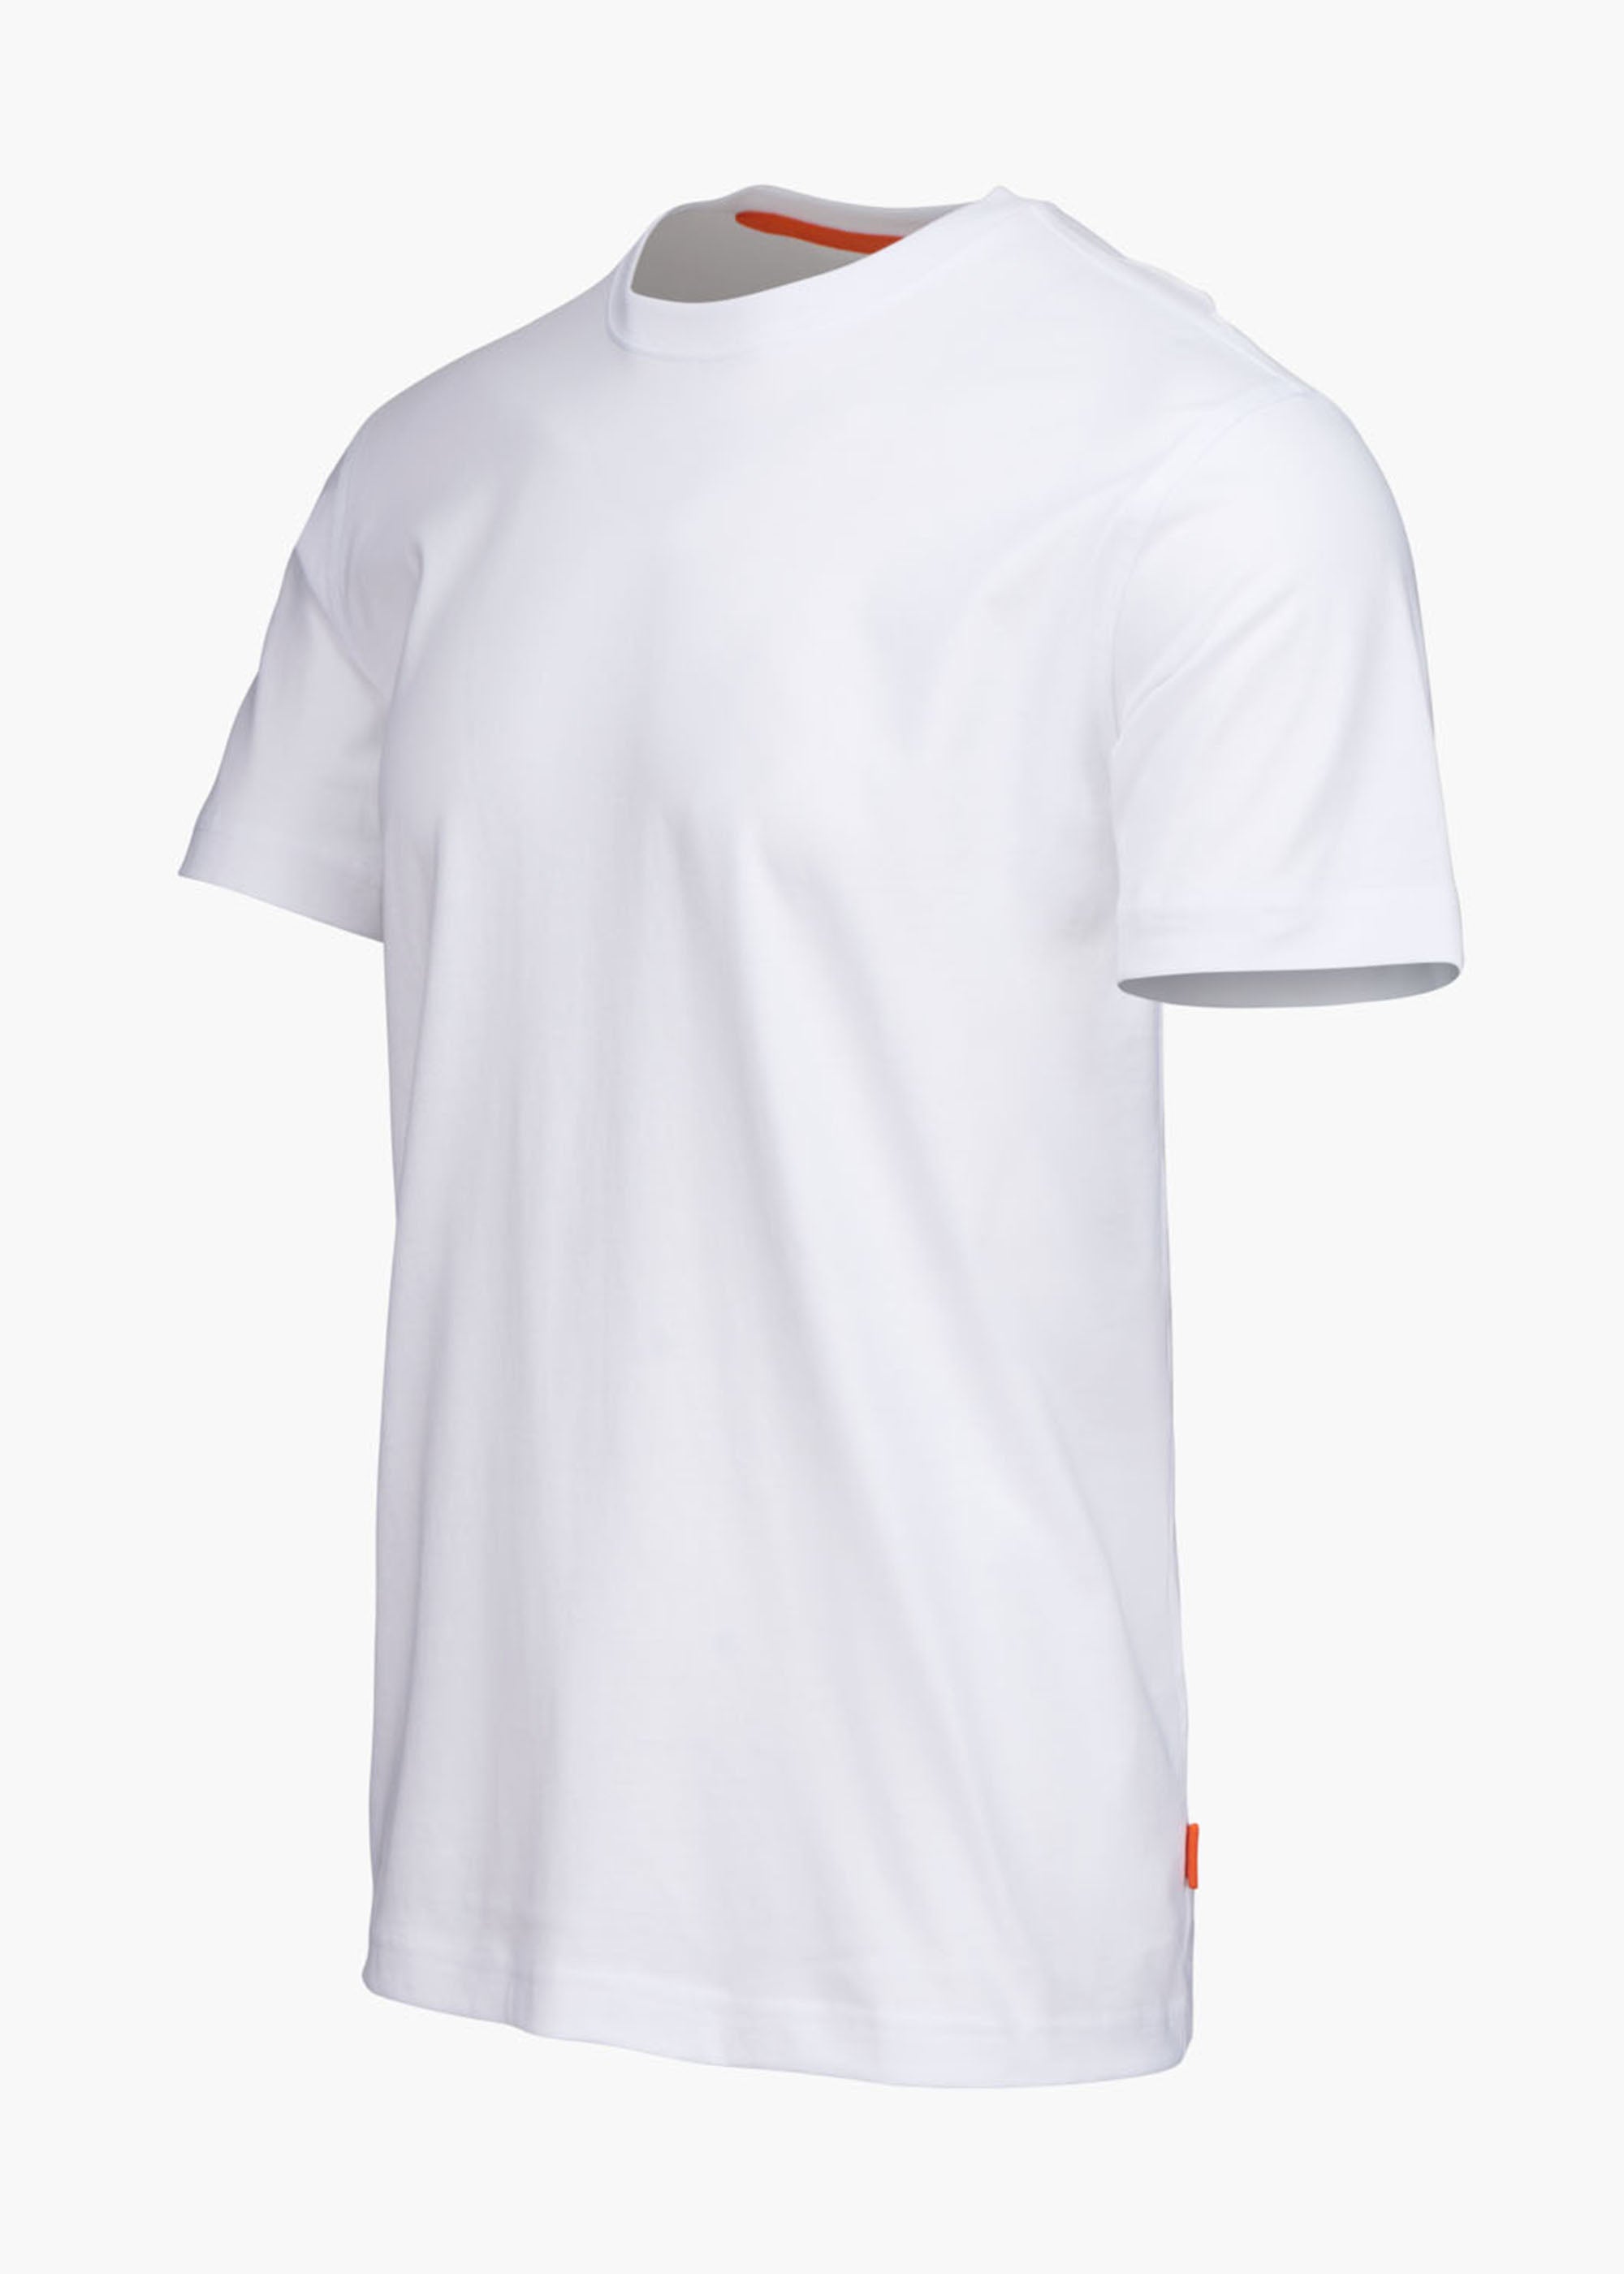 Aksla T Shirt - background::white,variant::White